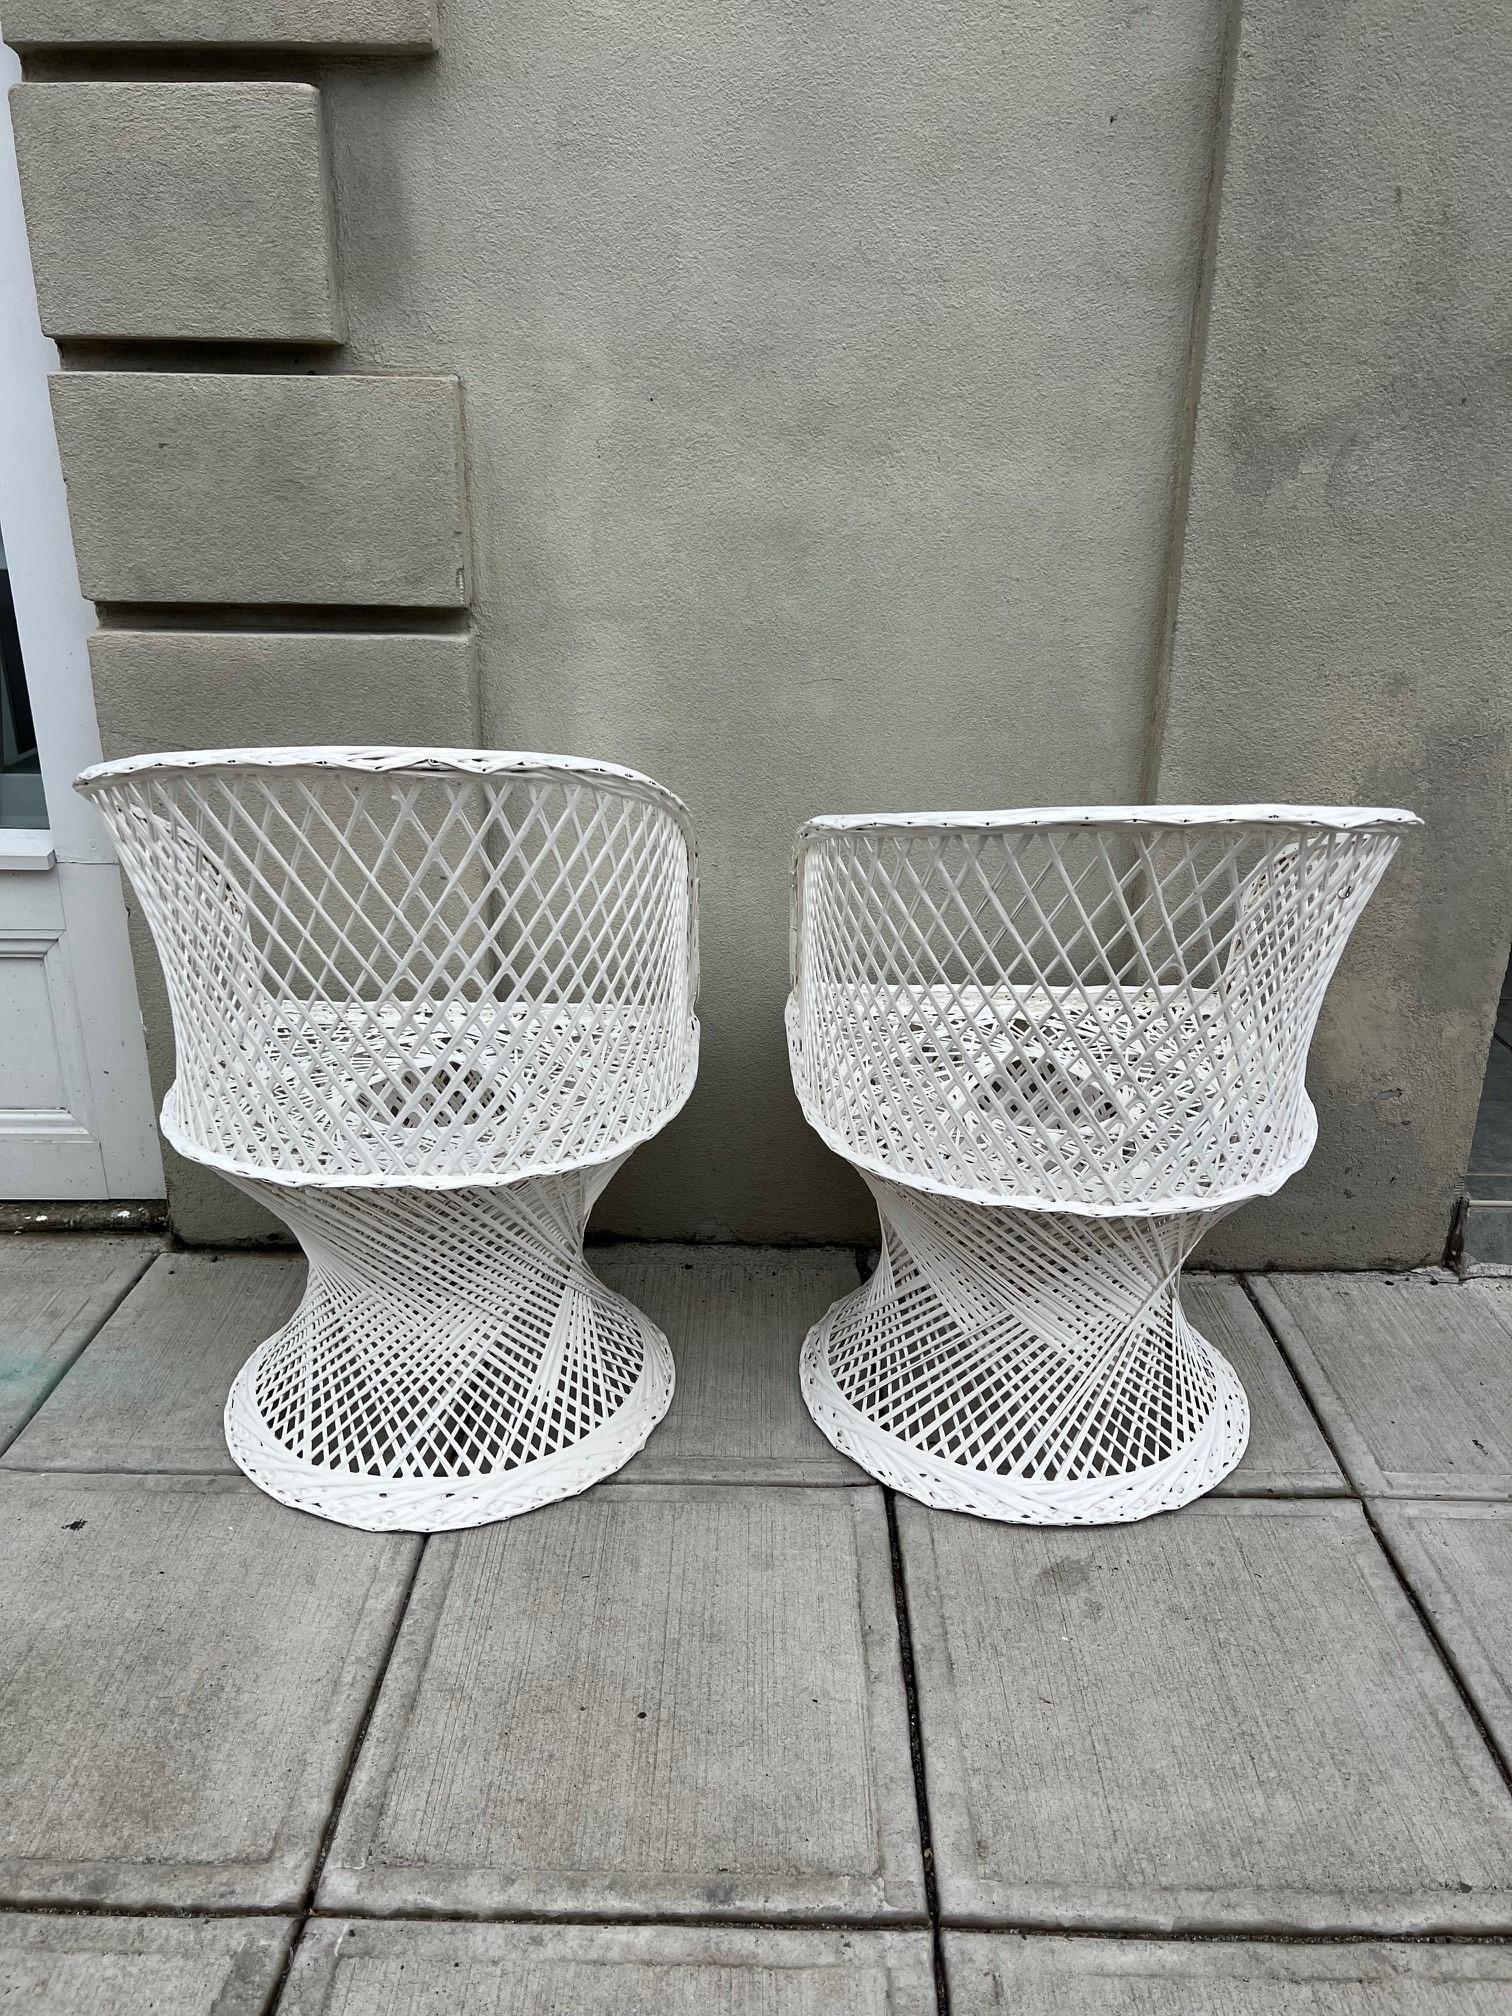 Pair of Mid Century Modern Spun Fiberglass Chairs by Russell Woodard 1960-1969 For Sale 2